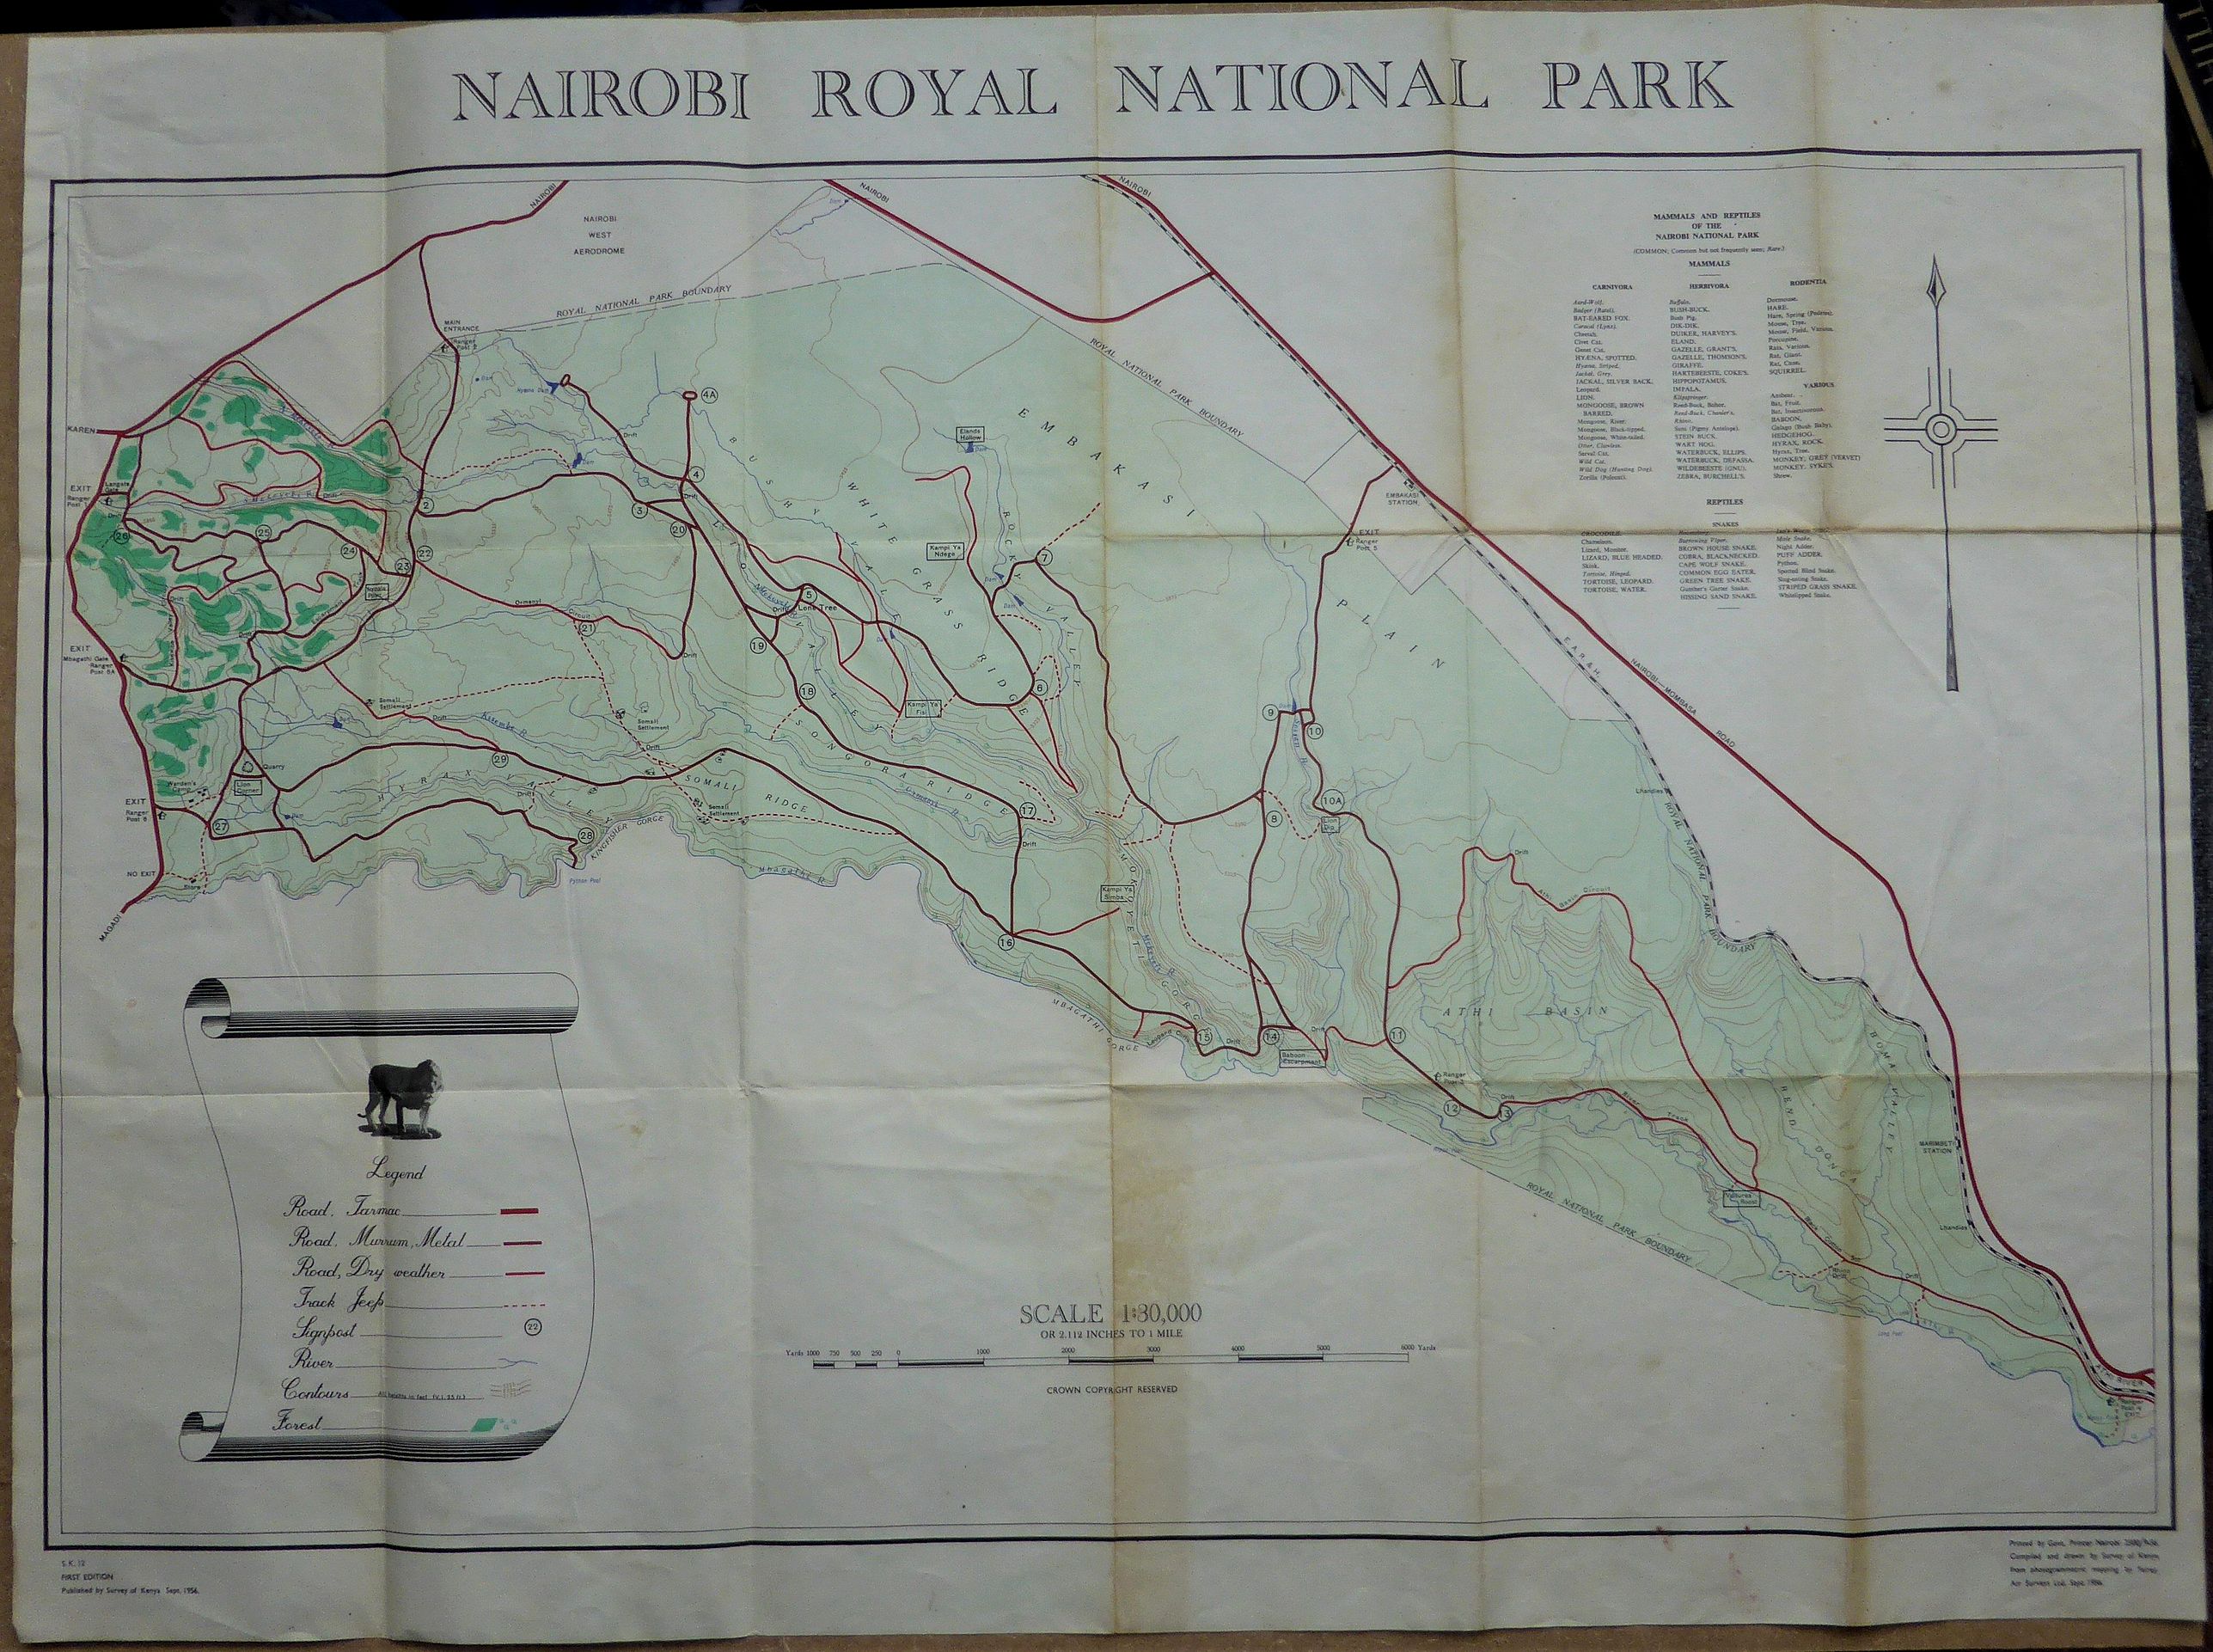 Nairobi Royal National Park